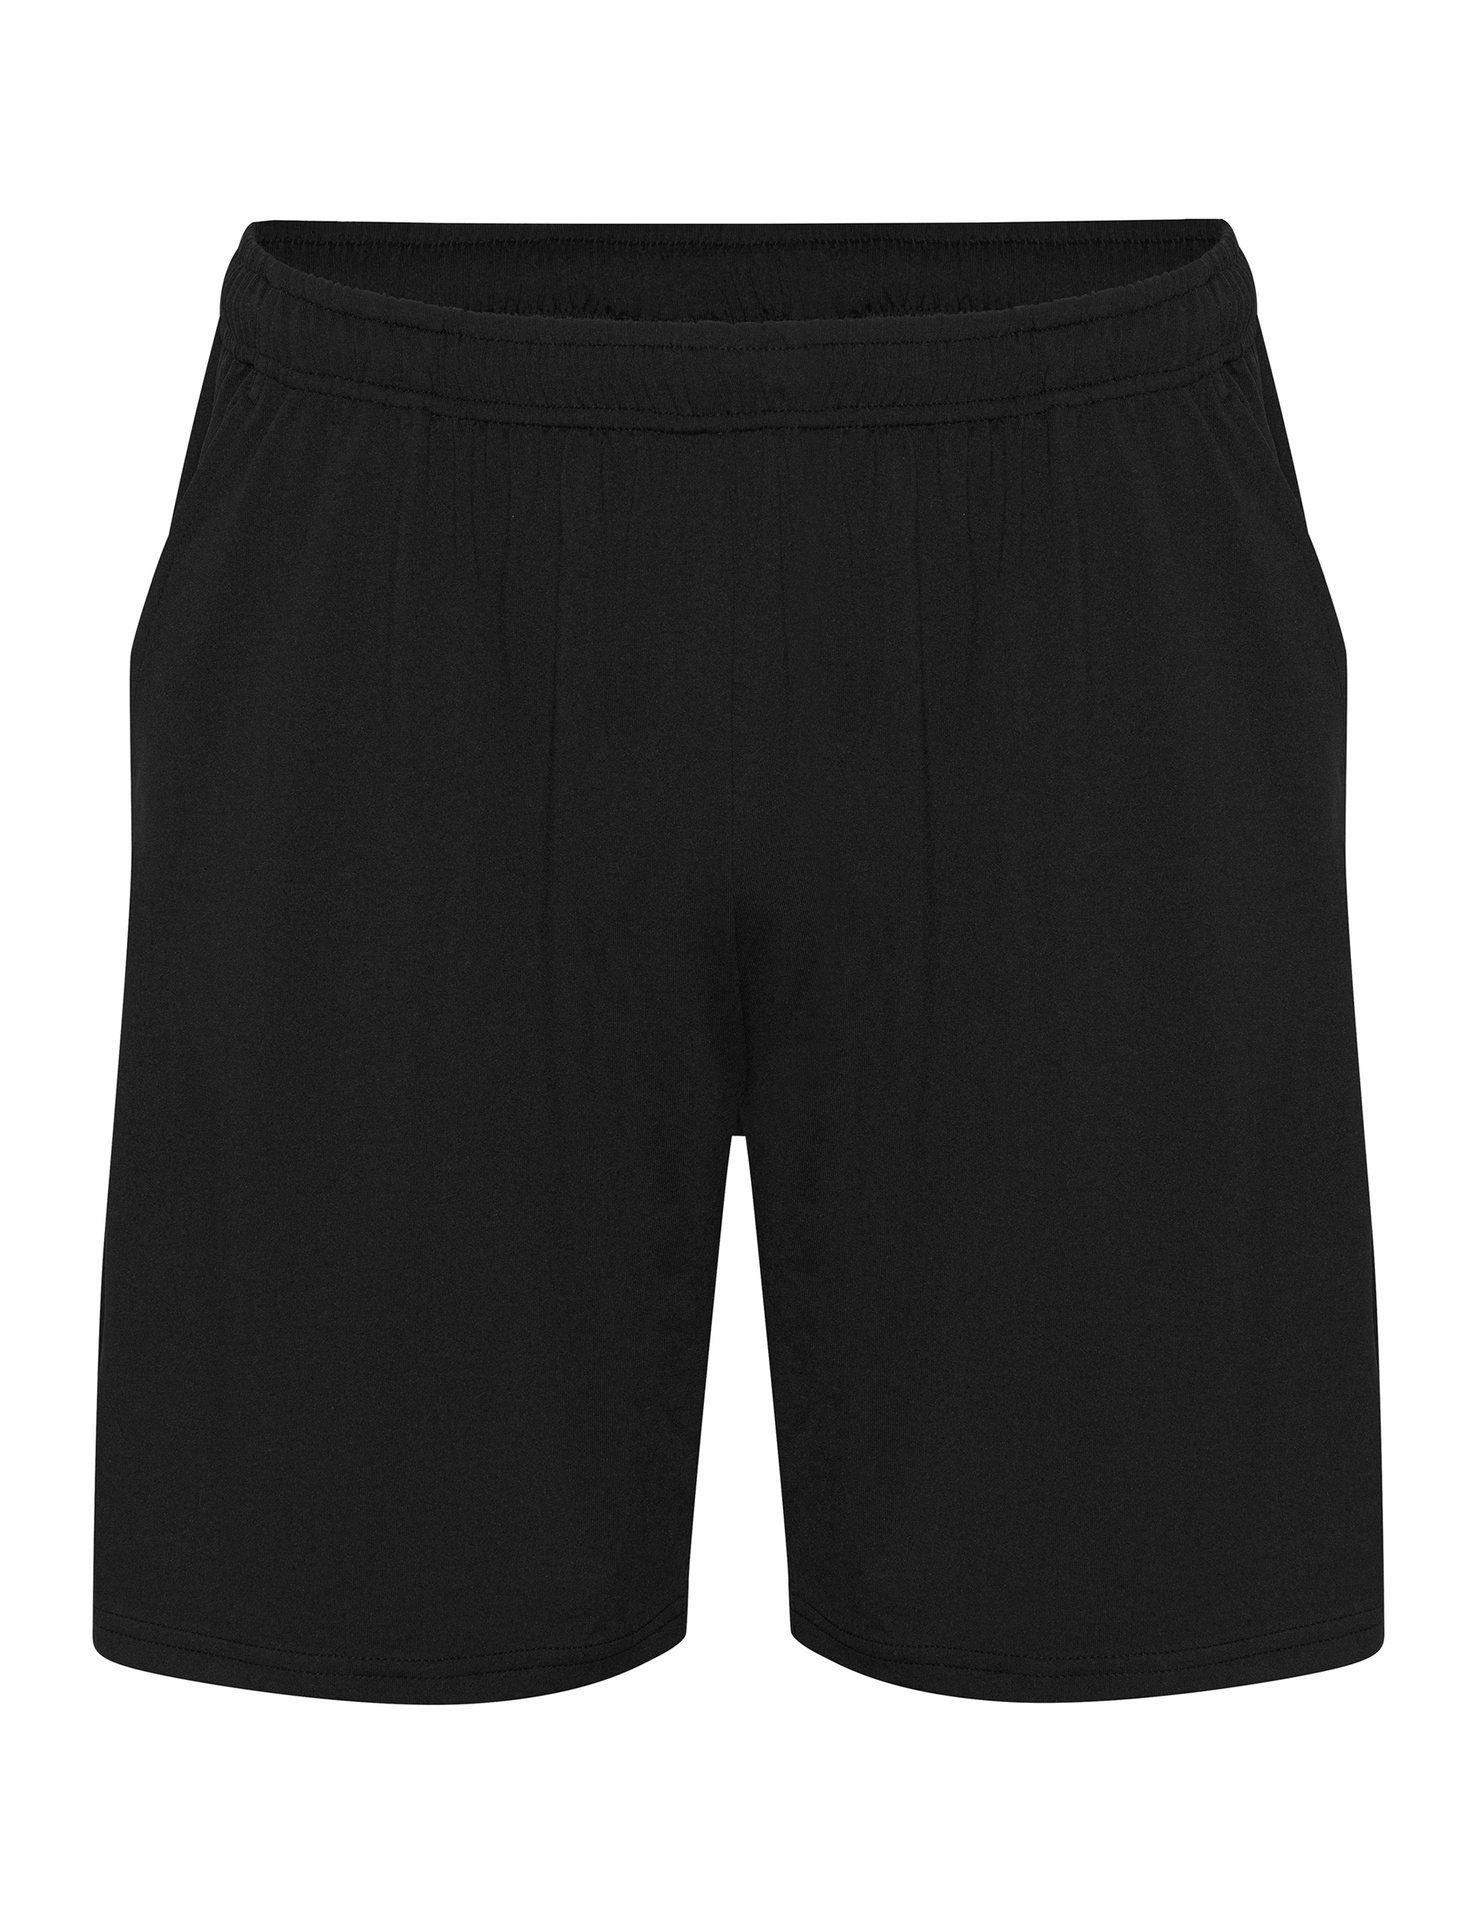 [PR/03858] Unisex Recycled Performance Shorts (Black 03, M)